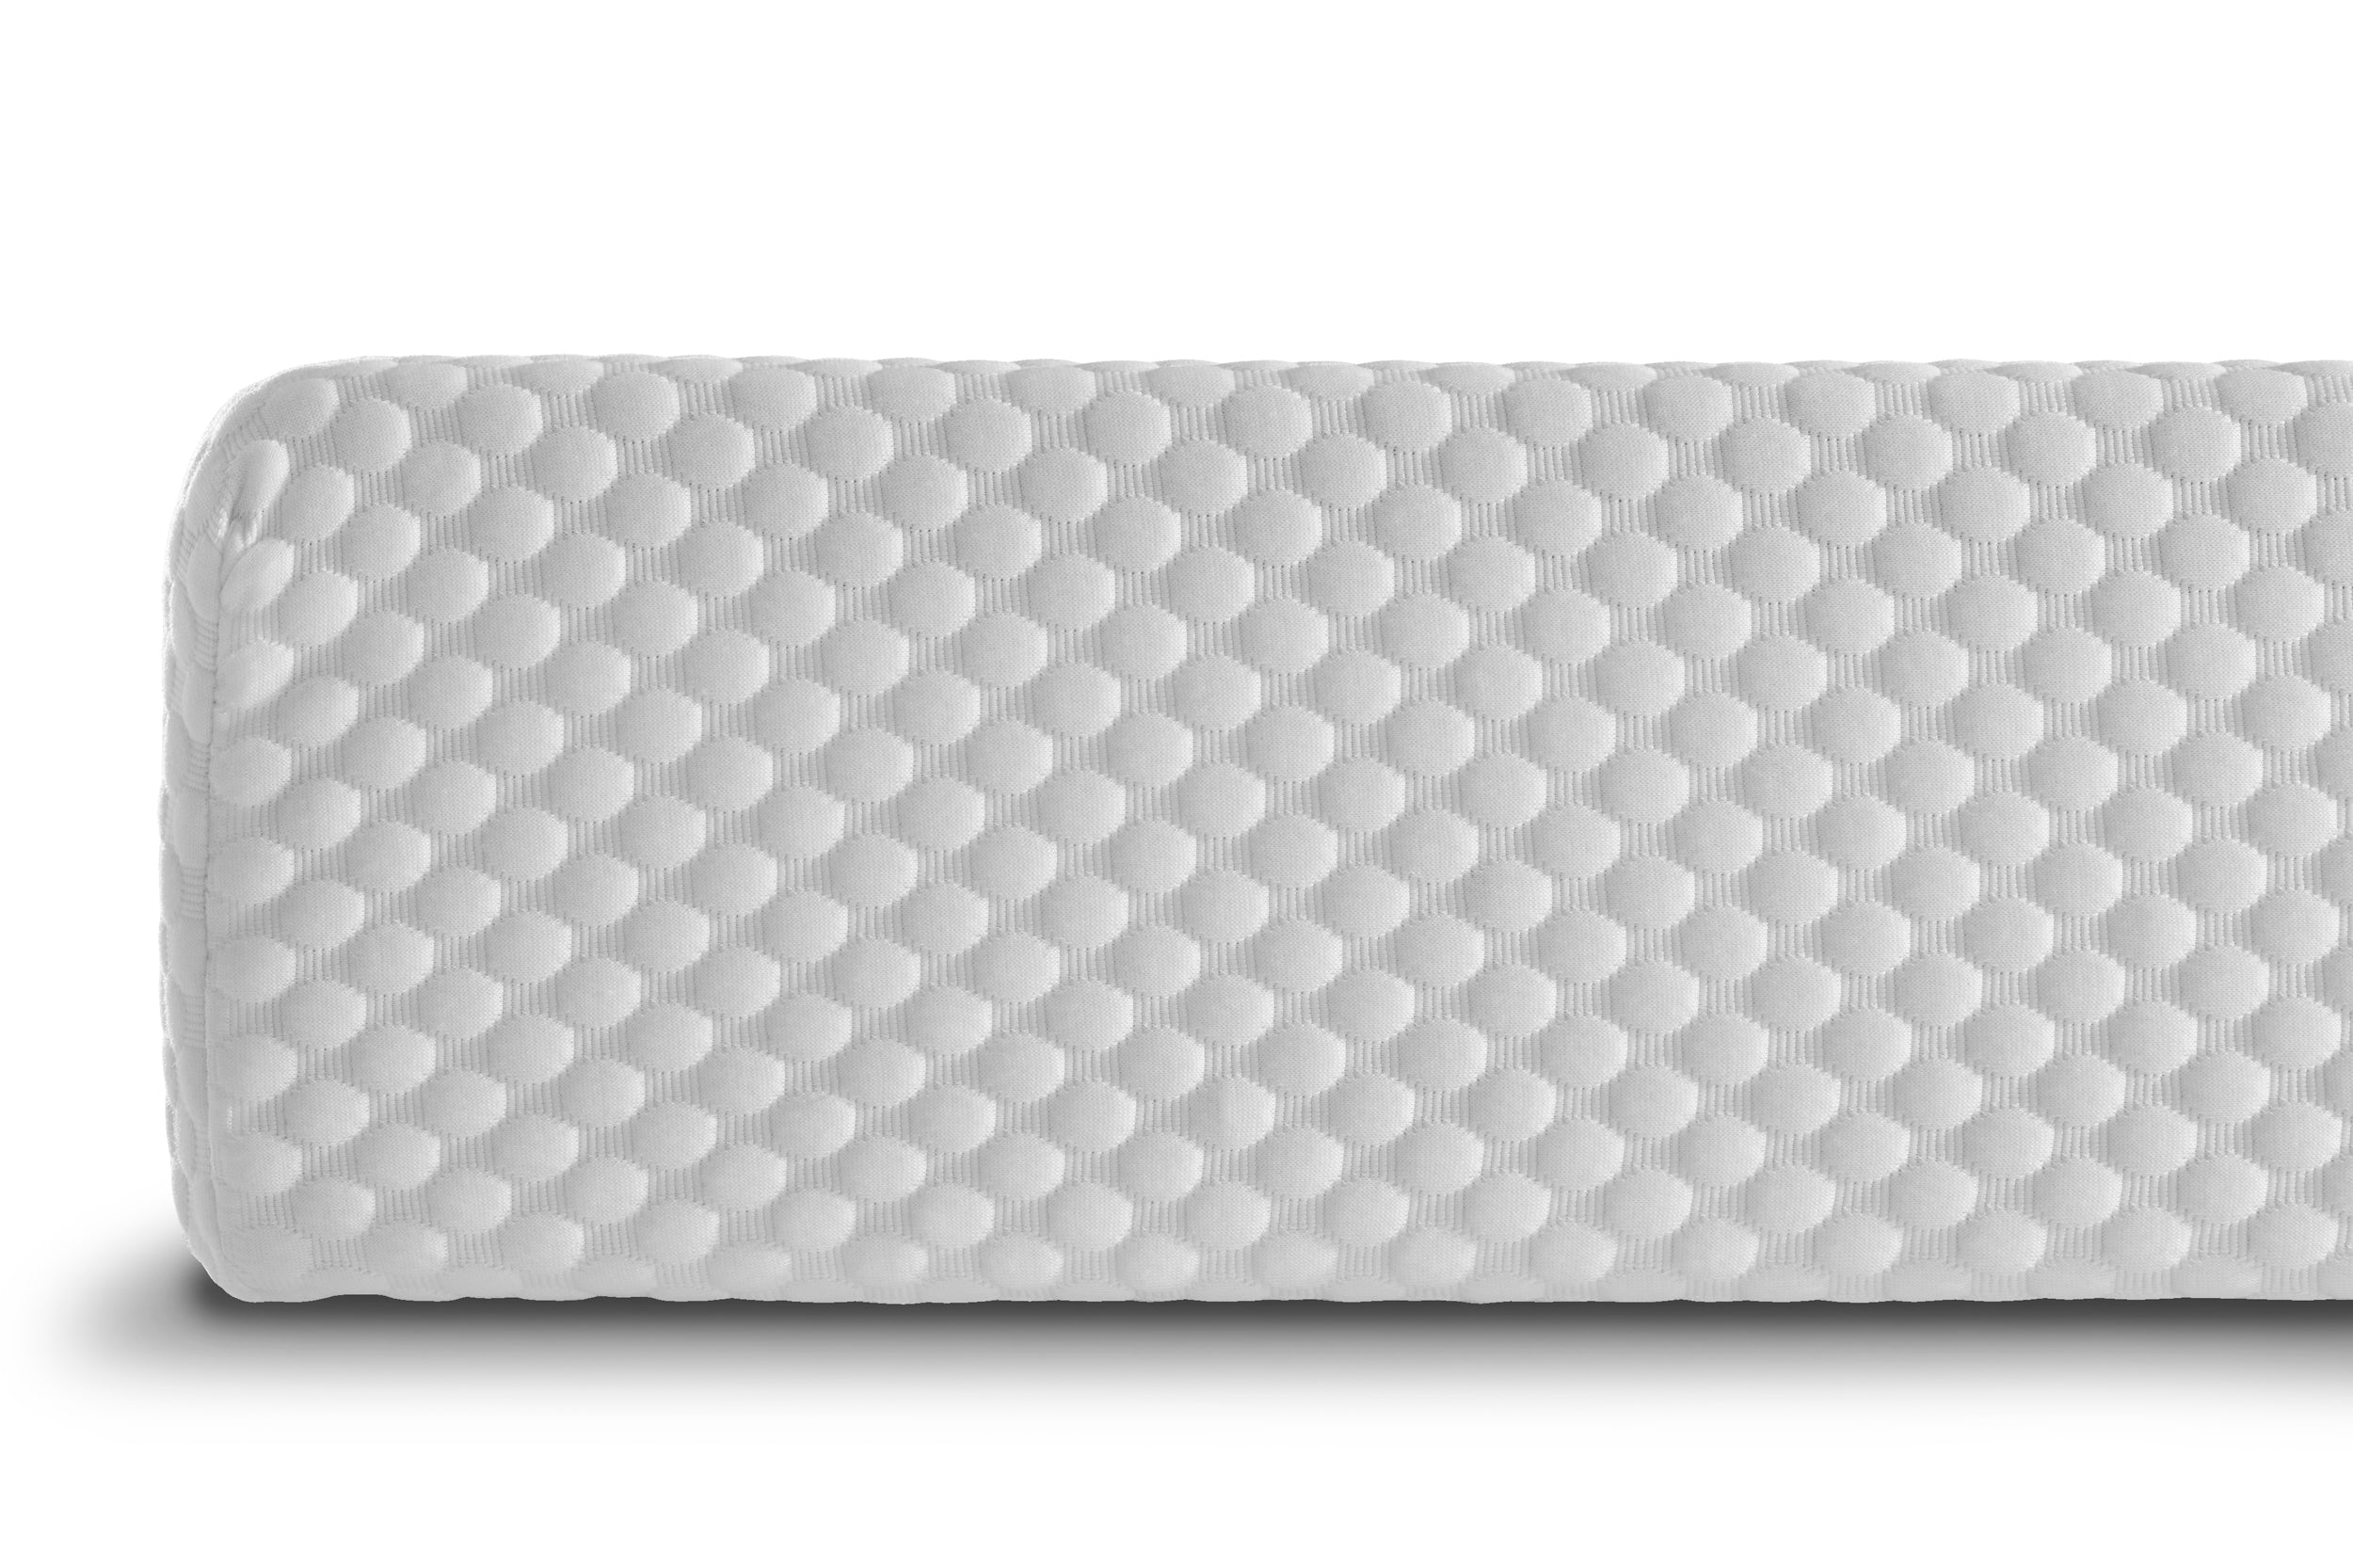 Shift Plus Hypoallergenic Mattress - 2 Foam Layers